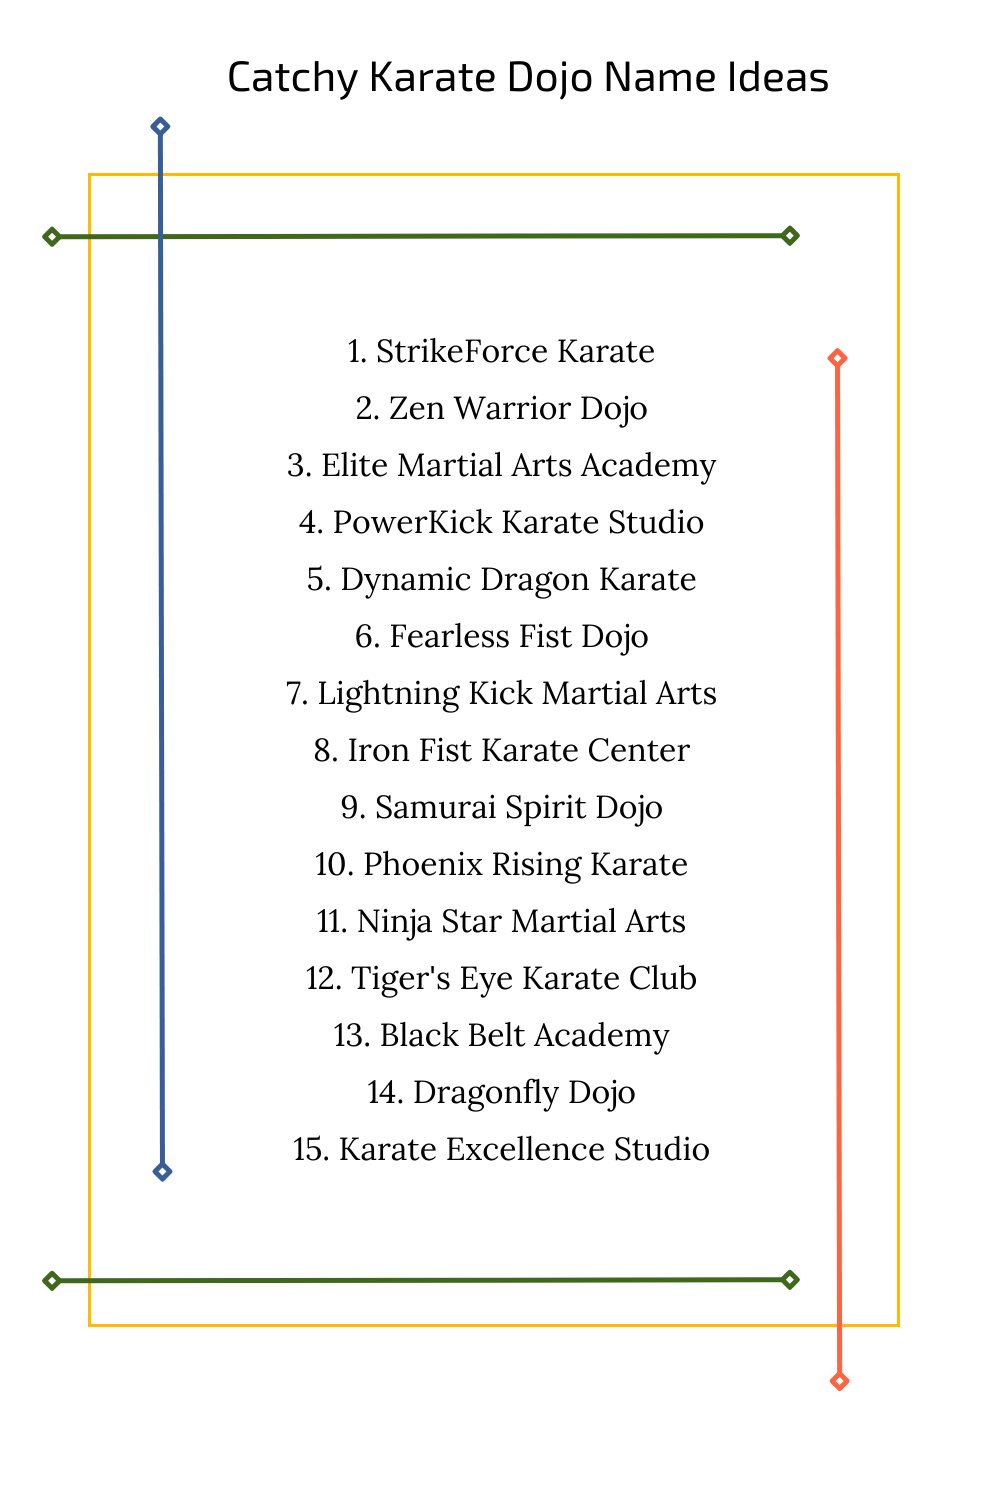 Catchy Karate Dojo Name Ideas